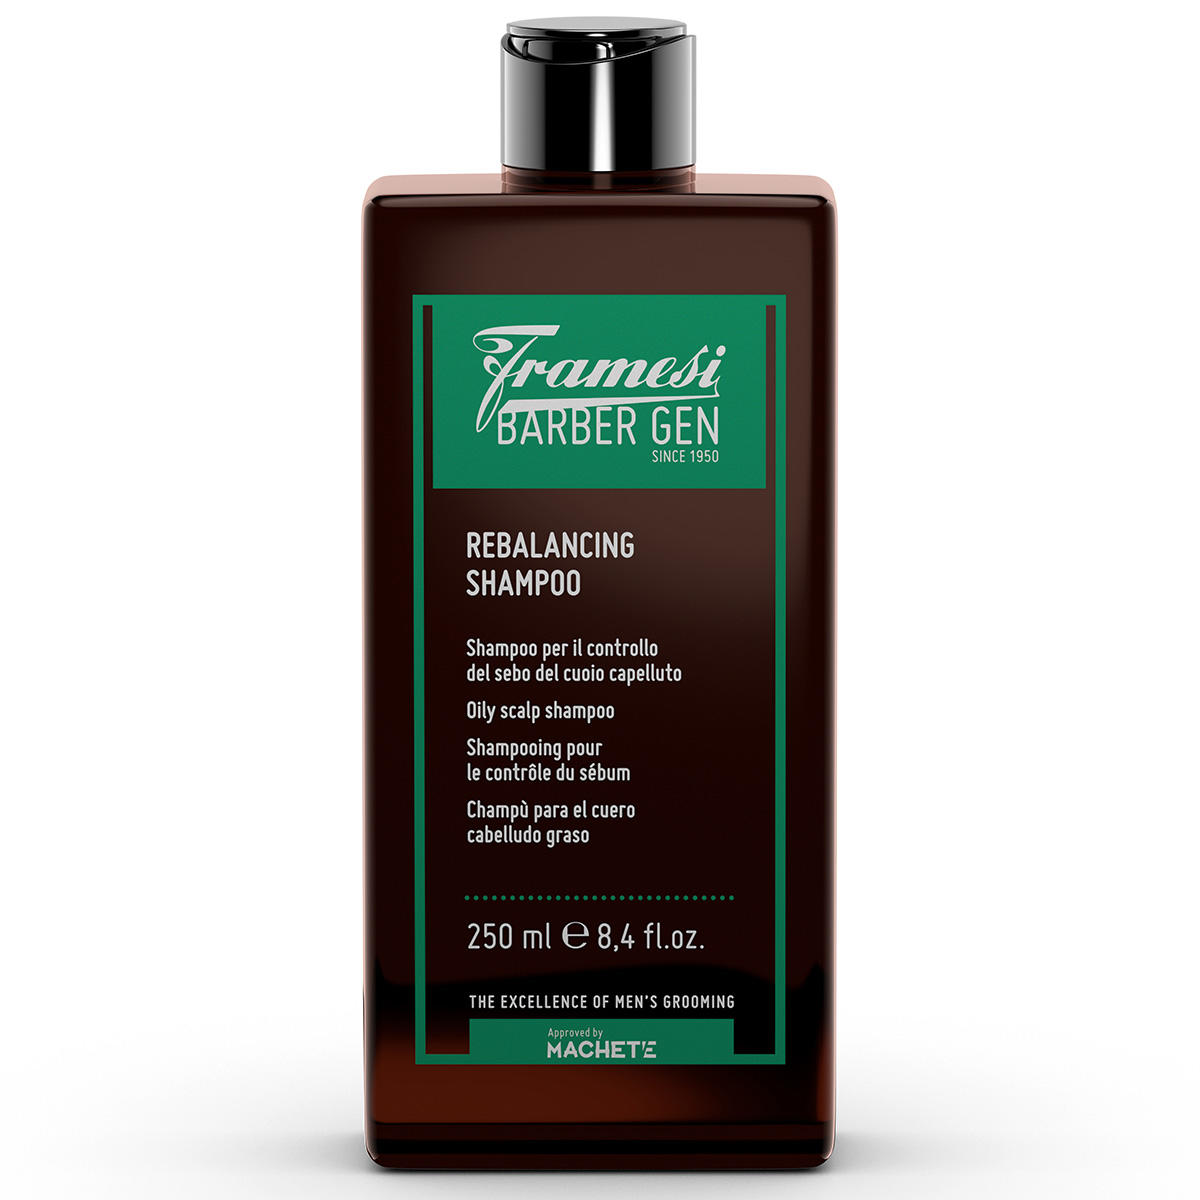 framesi BARBER GEN Rebalancing Shampoo 250 ml - 1